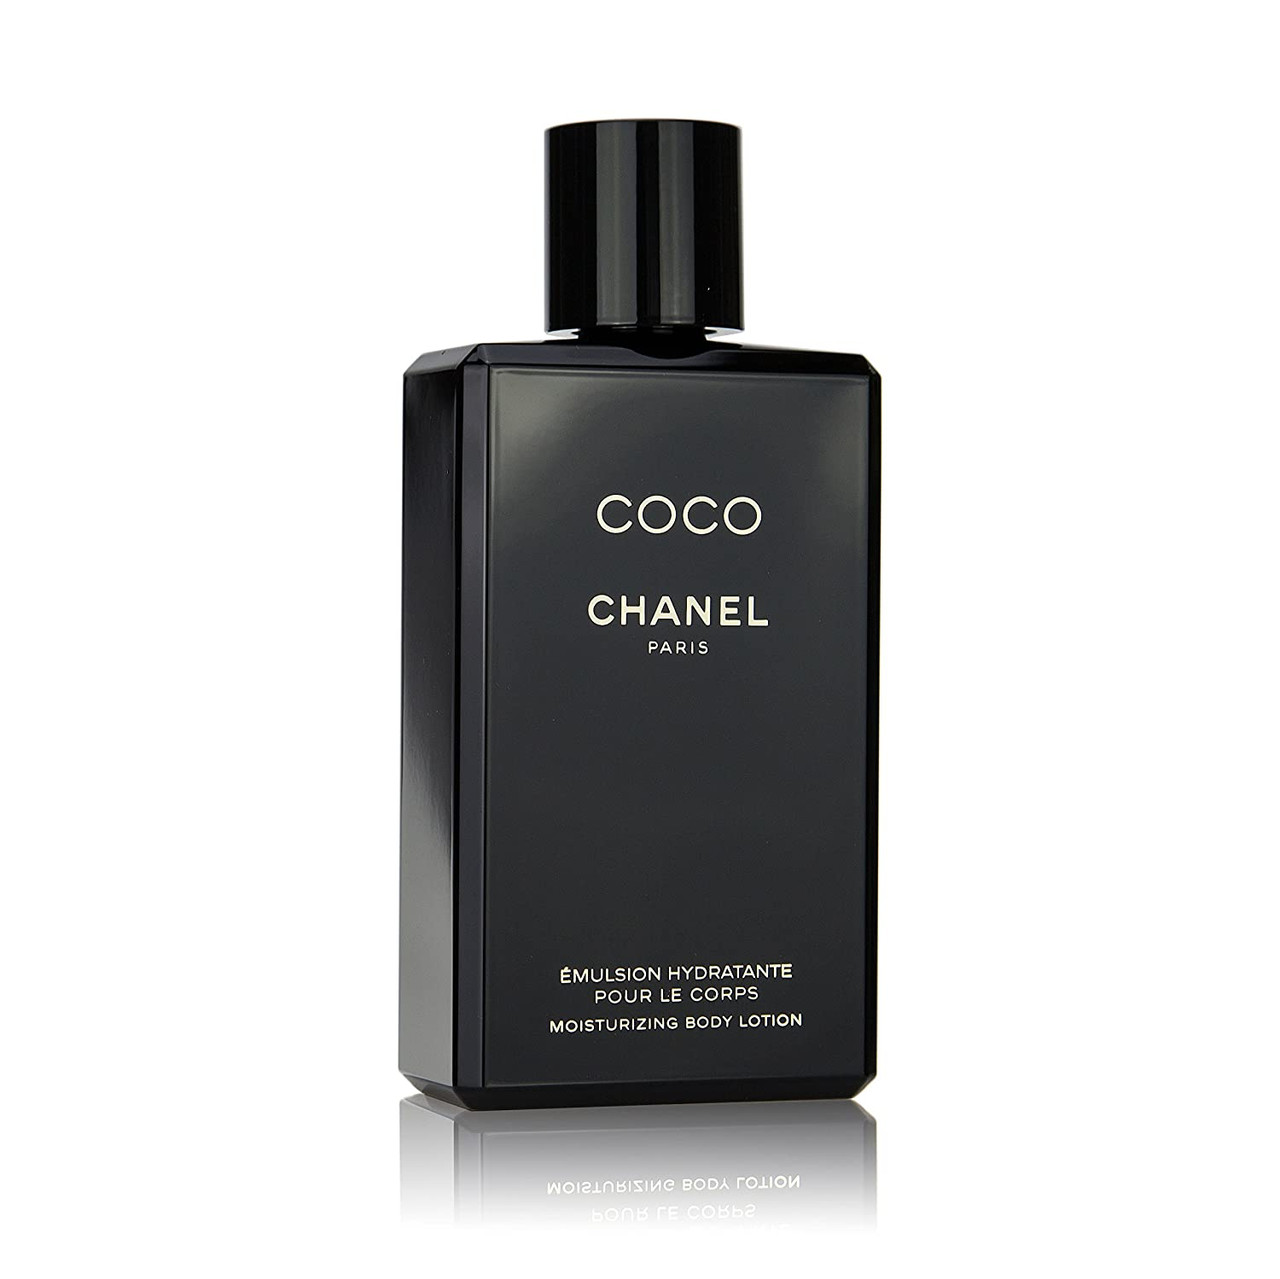 chanel moisturizing body lotion, 6.8-oz coco mademoiselle